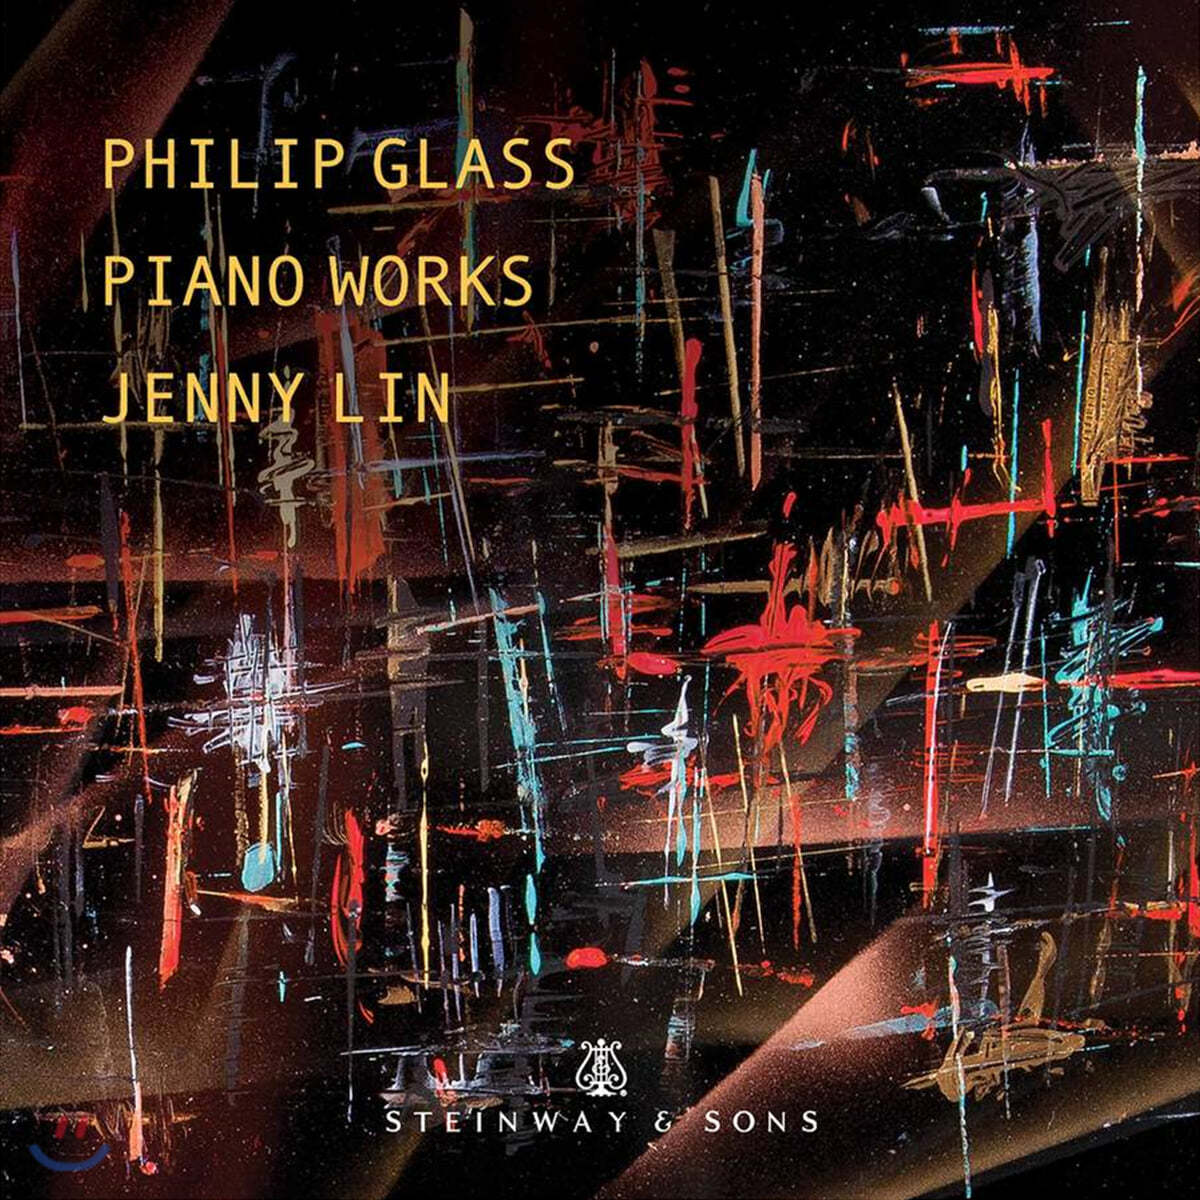 Jenny Lin 필립 글래스: 매드 러시, 변신 [피아노 독주집] (Philip Glass: Piano Works)